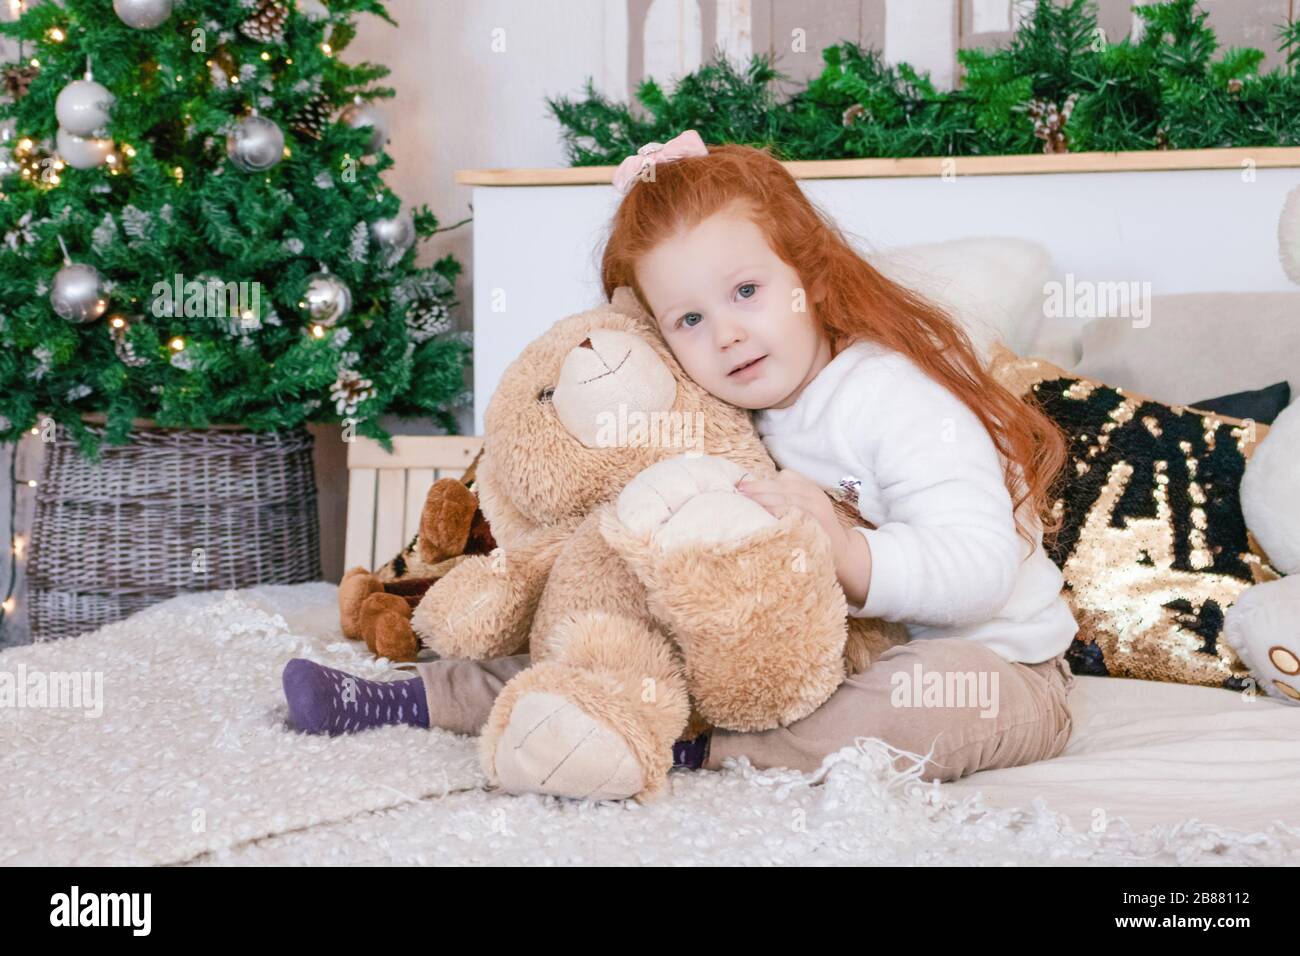 little girl hug bear at christmas photo Stock Photo